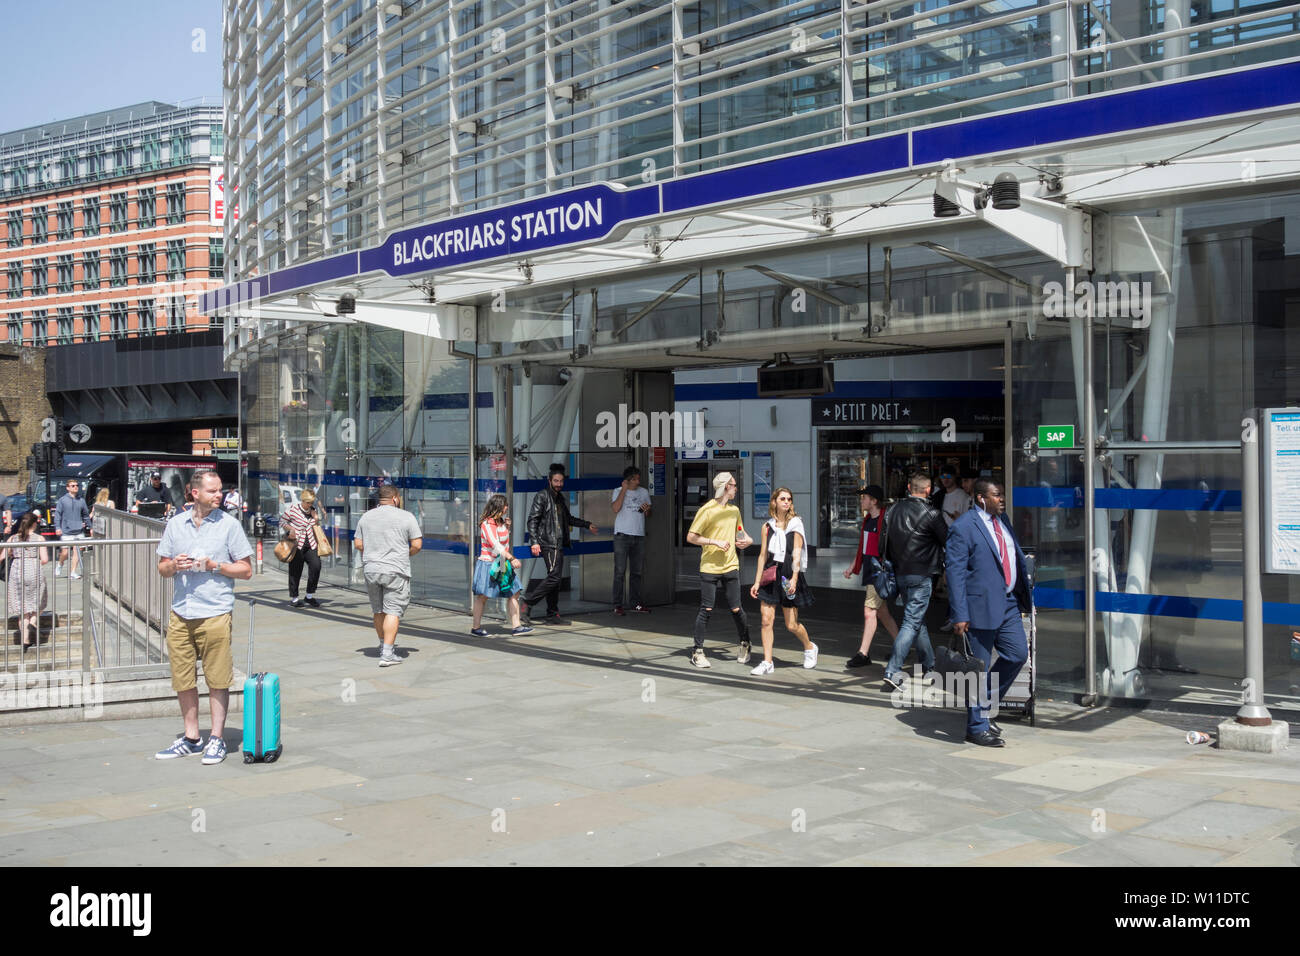 Blackfriars Station, Queen Victoria Street, London, UK Stockfoto